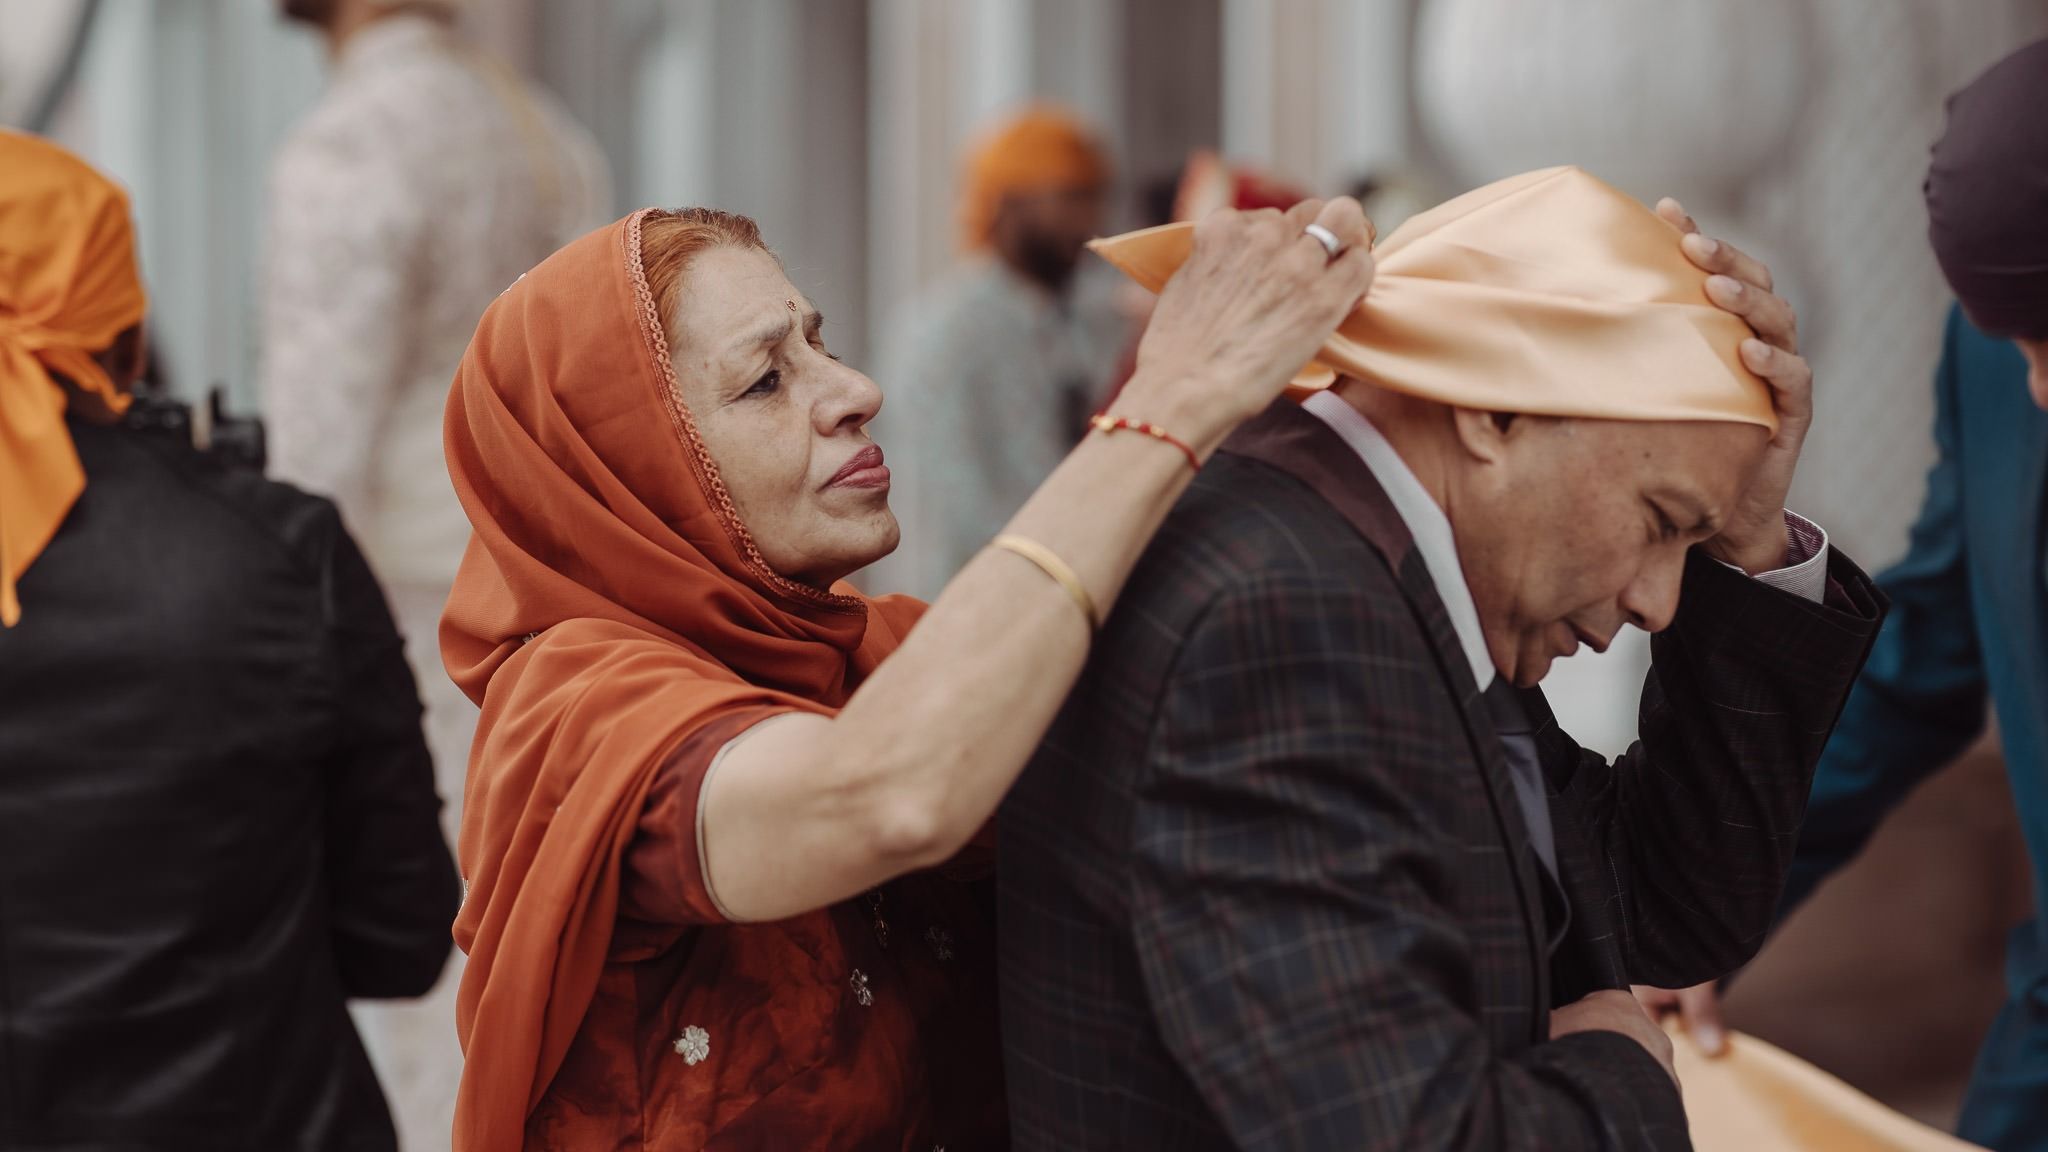 Modern-Sikh-Wedding-Photography-9